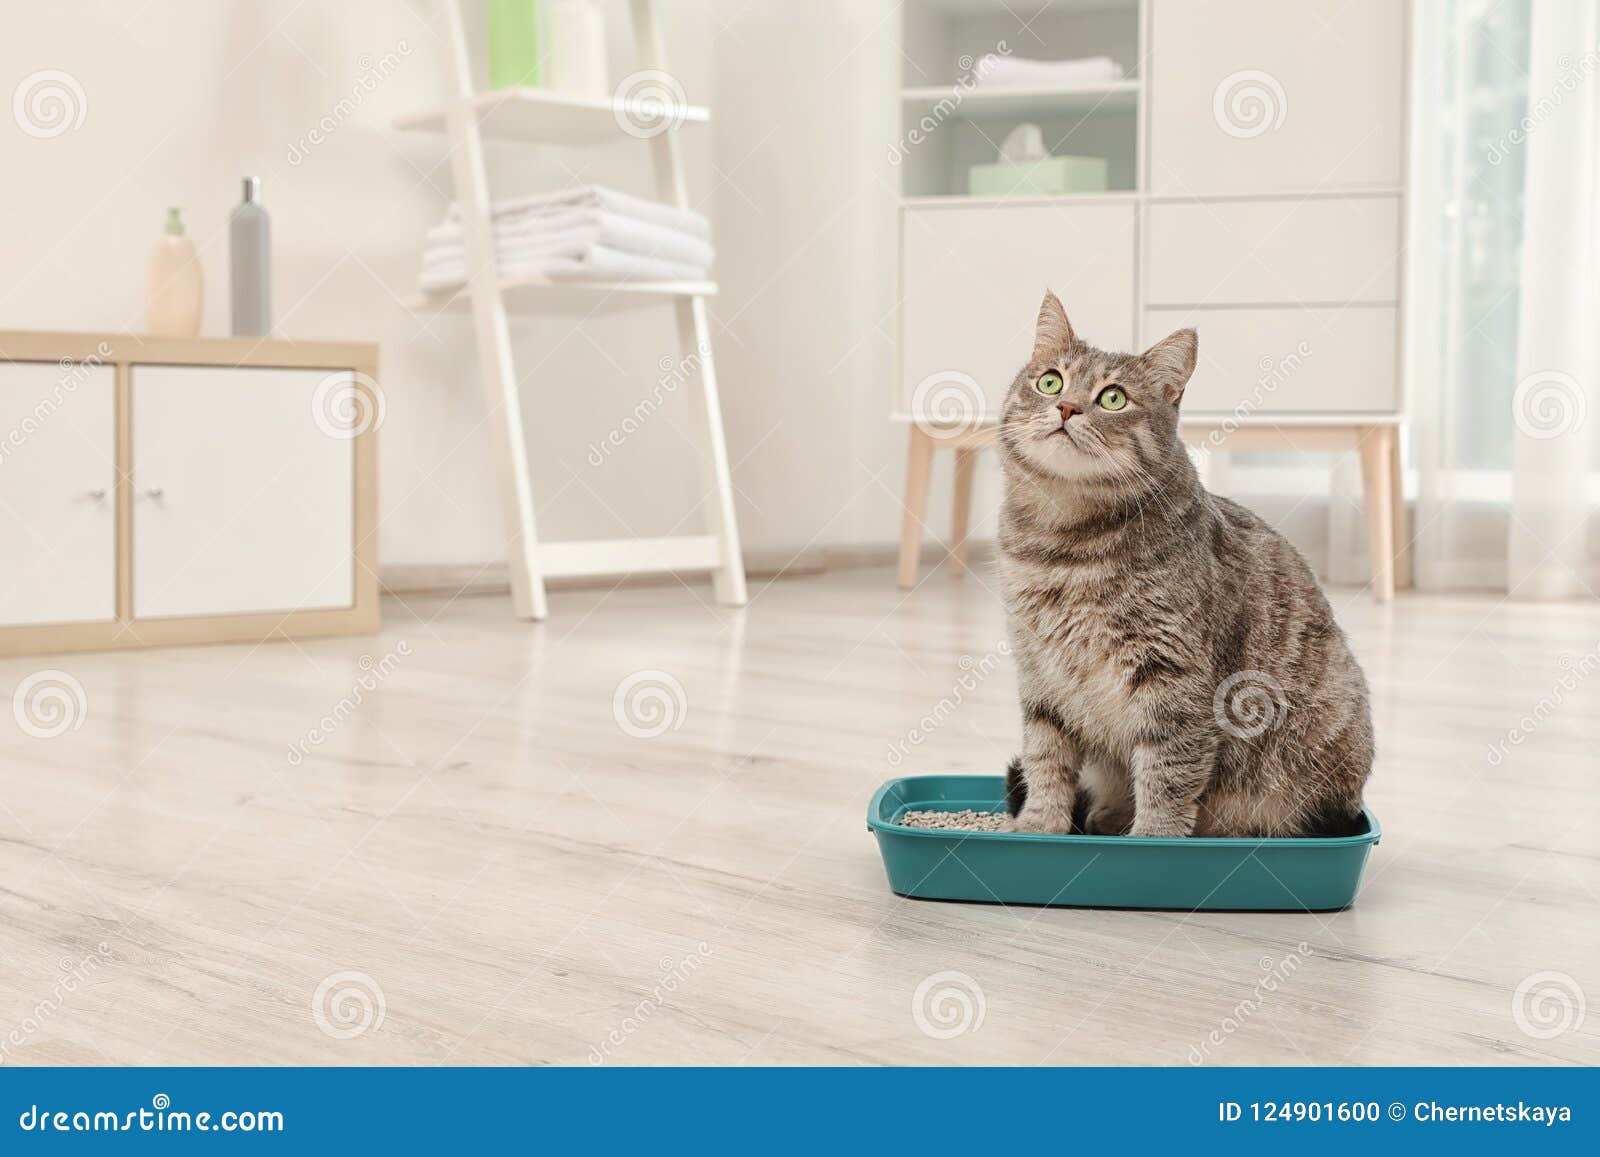 adorable grey cat in litter box indoors